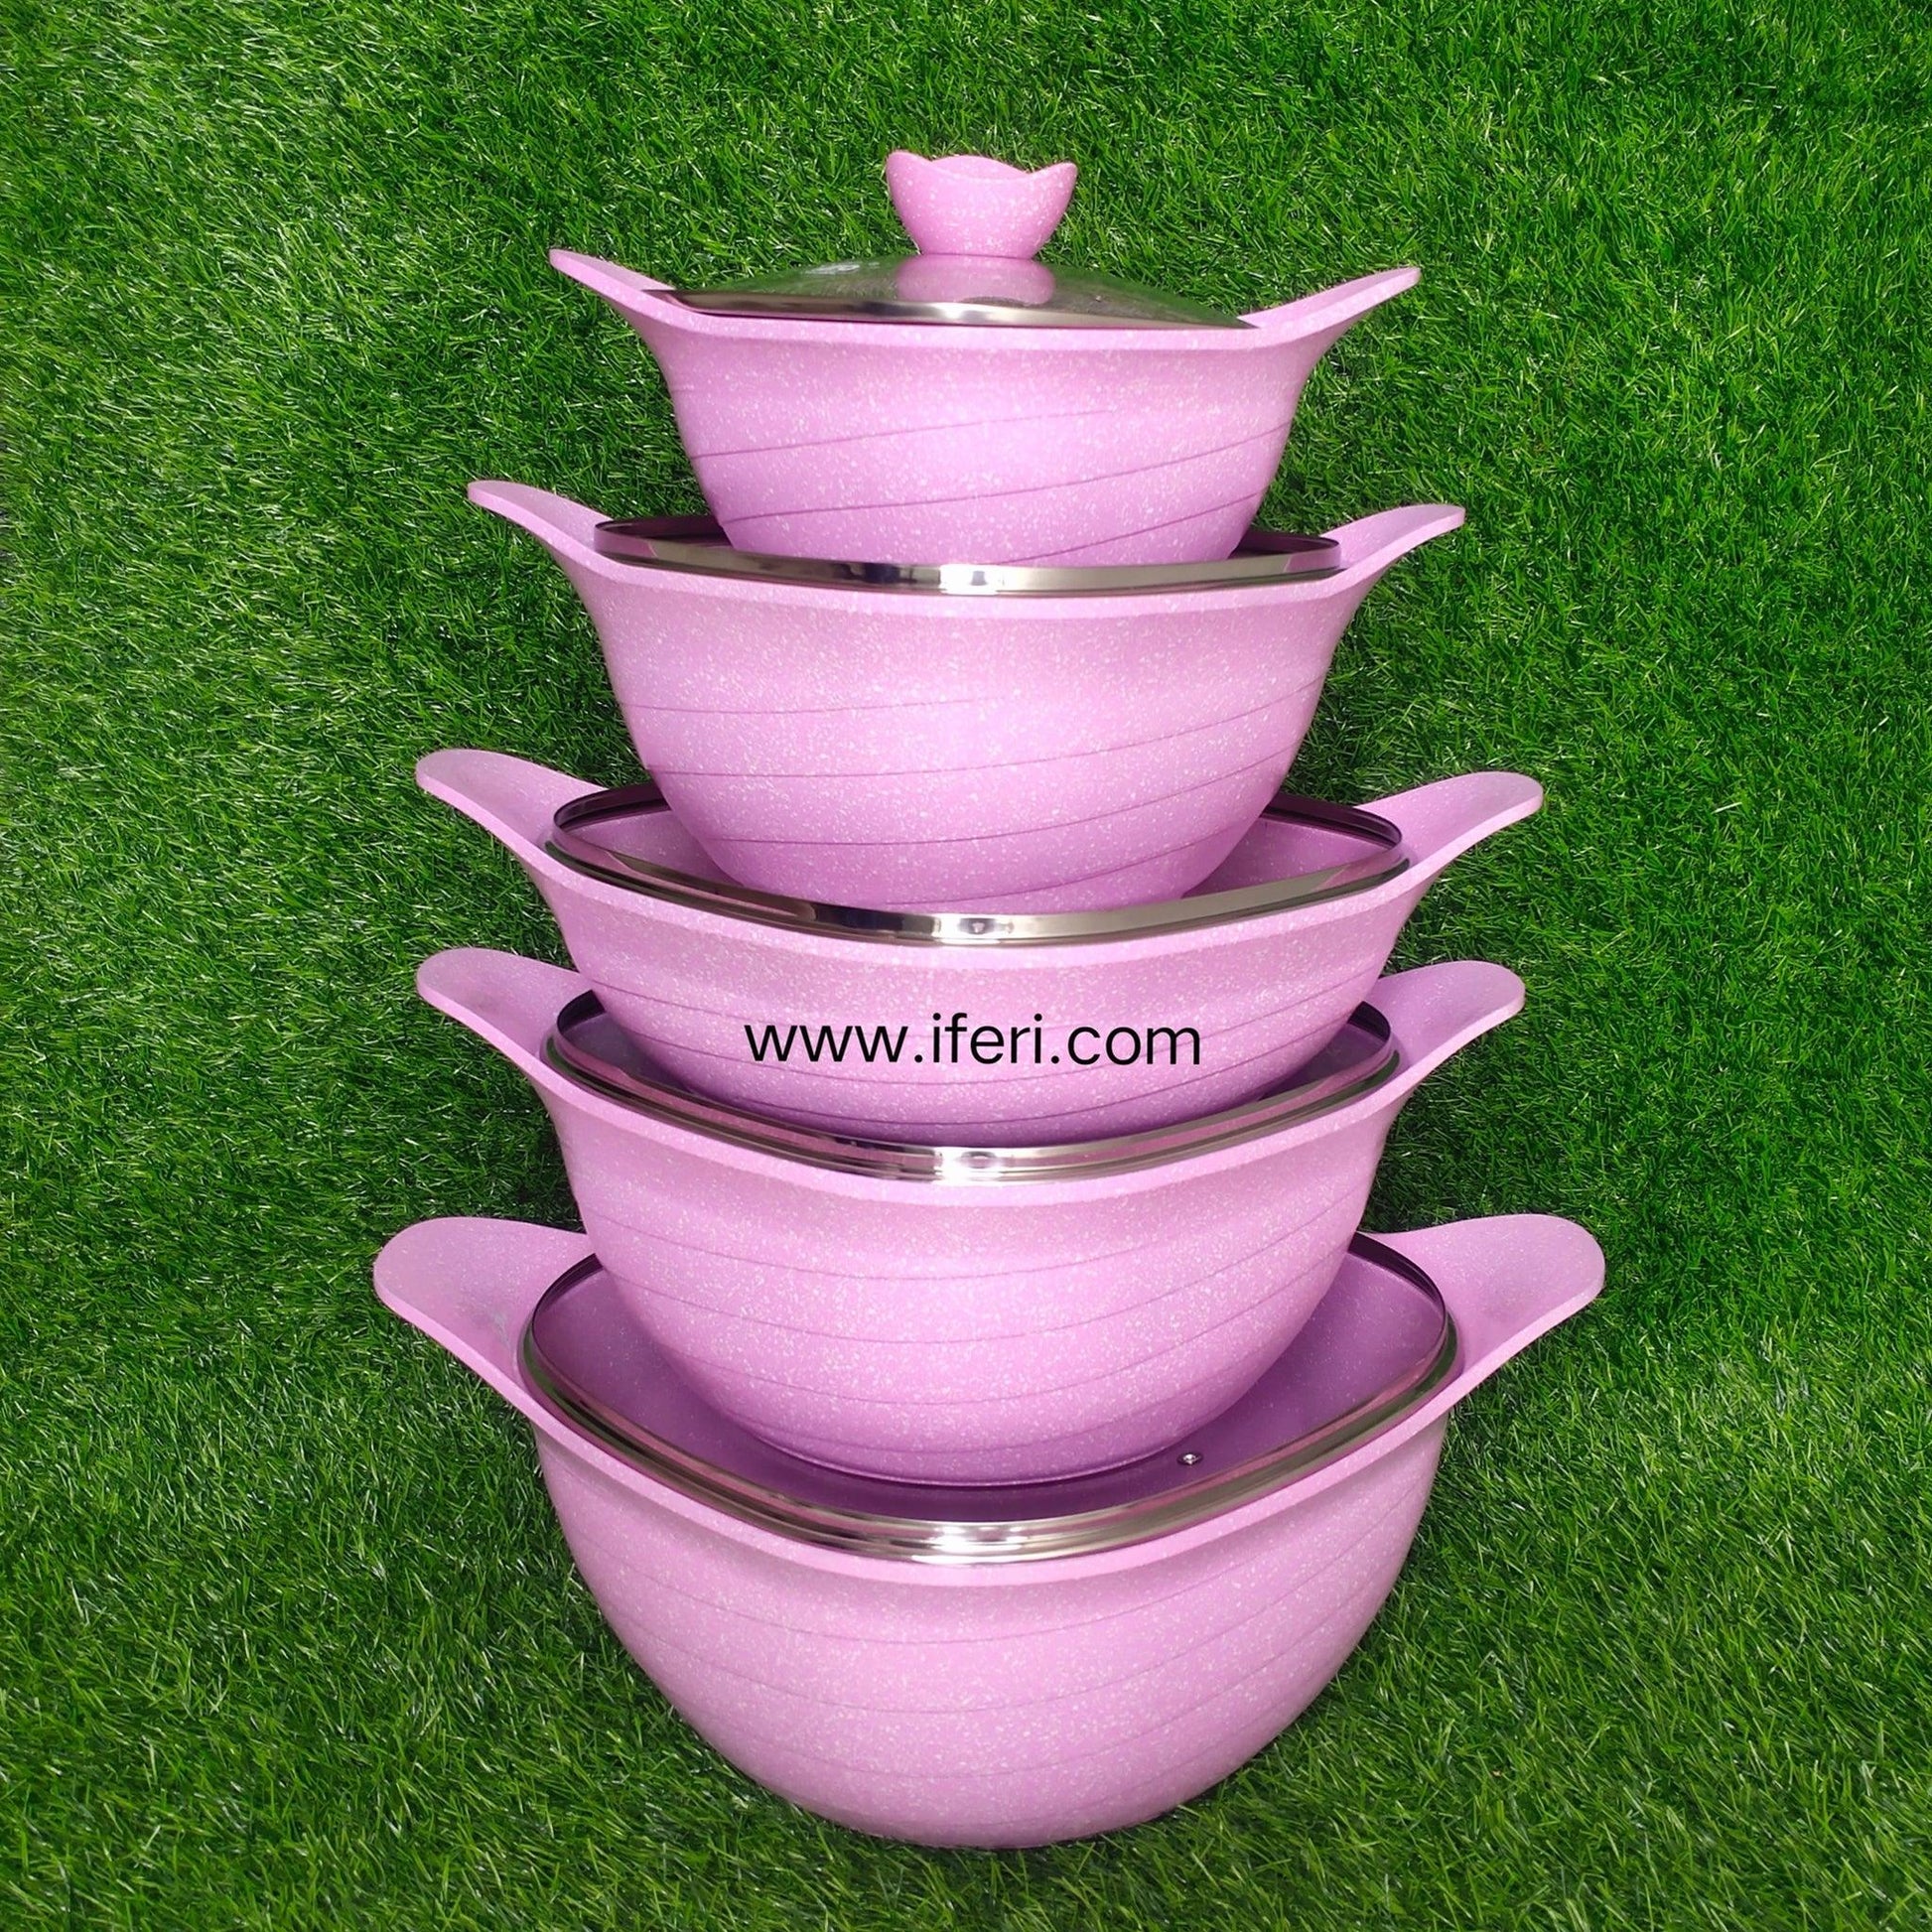 5 Pcs JIO Non Stick Granite Coated Cookware Set with Lid LB1518 Price in Bangladesh - iferi.com